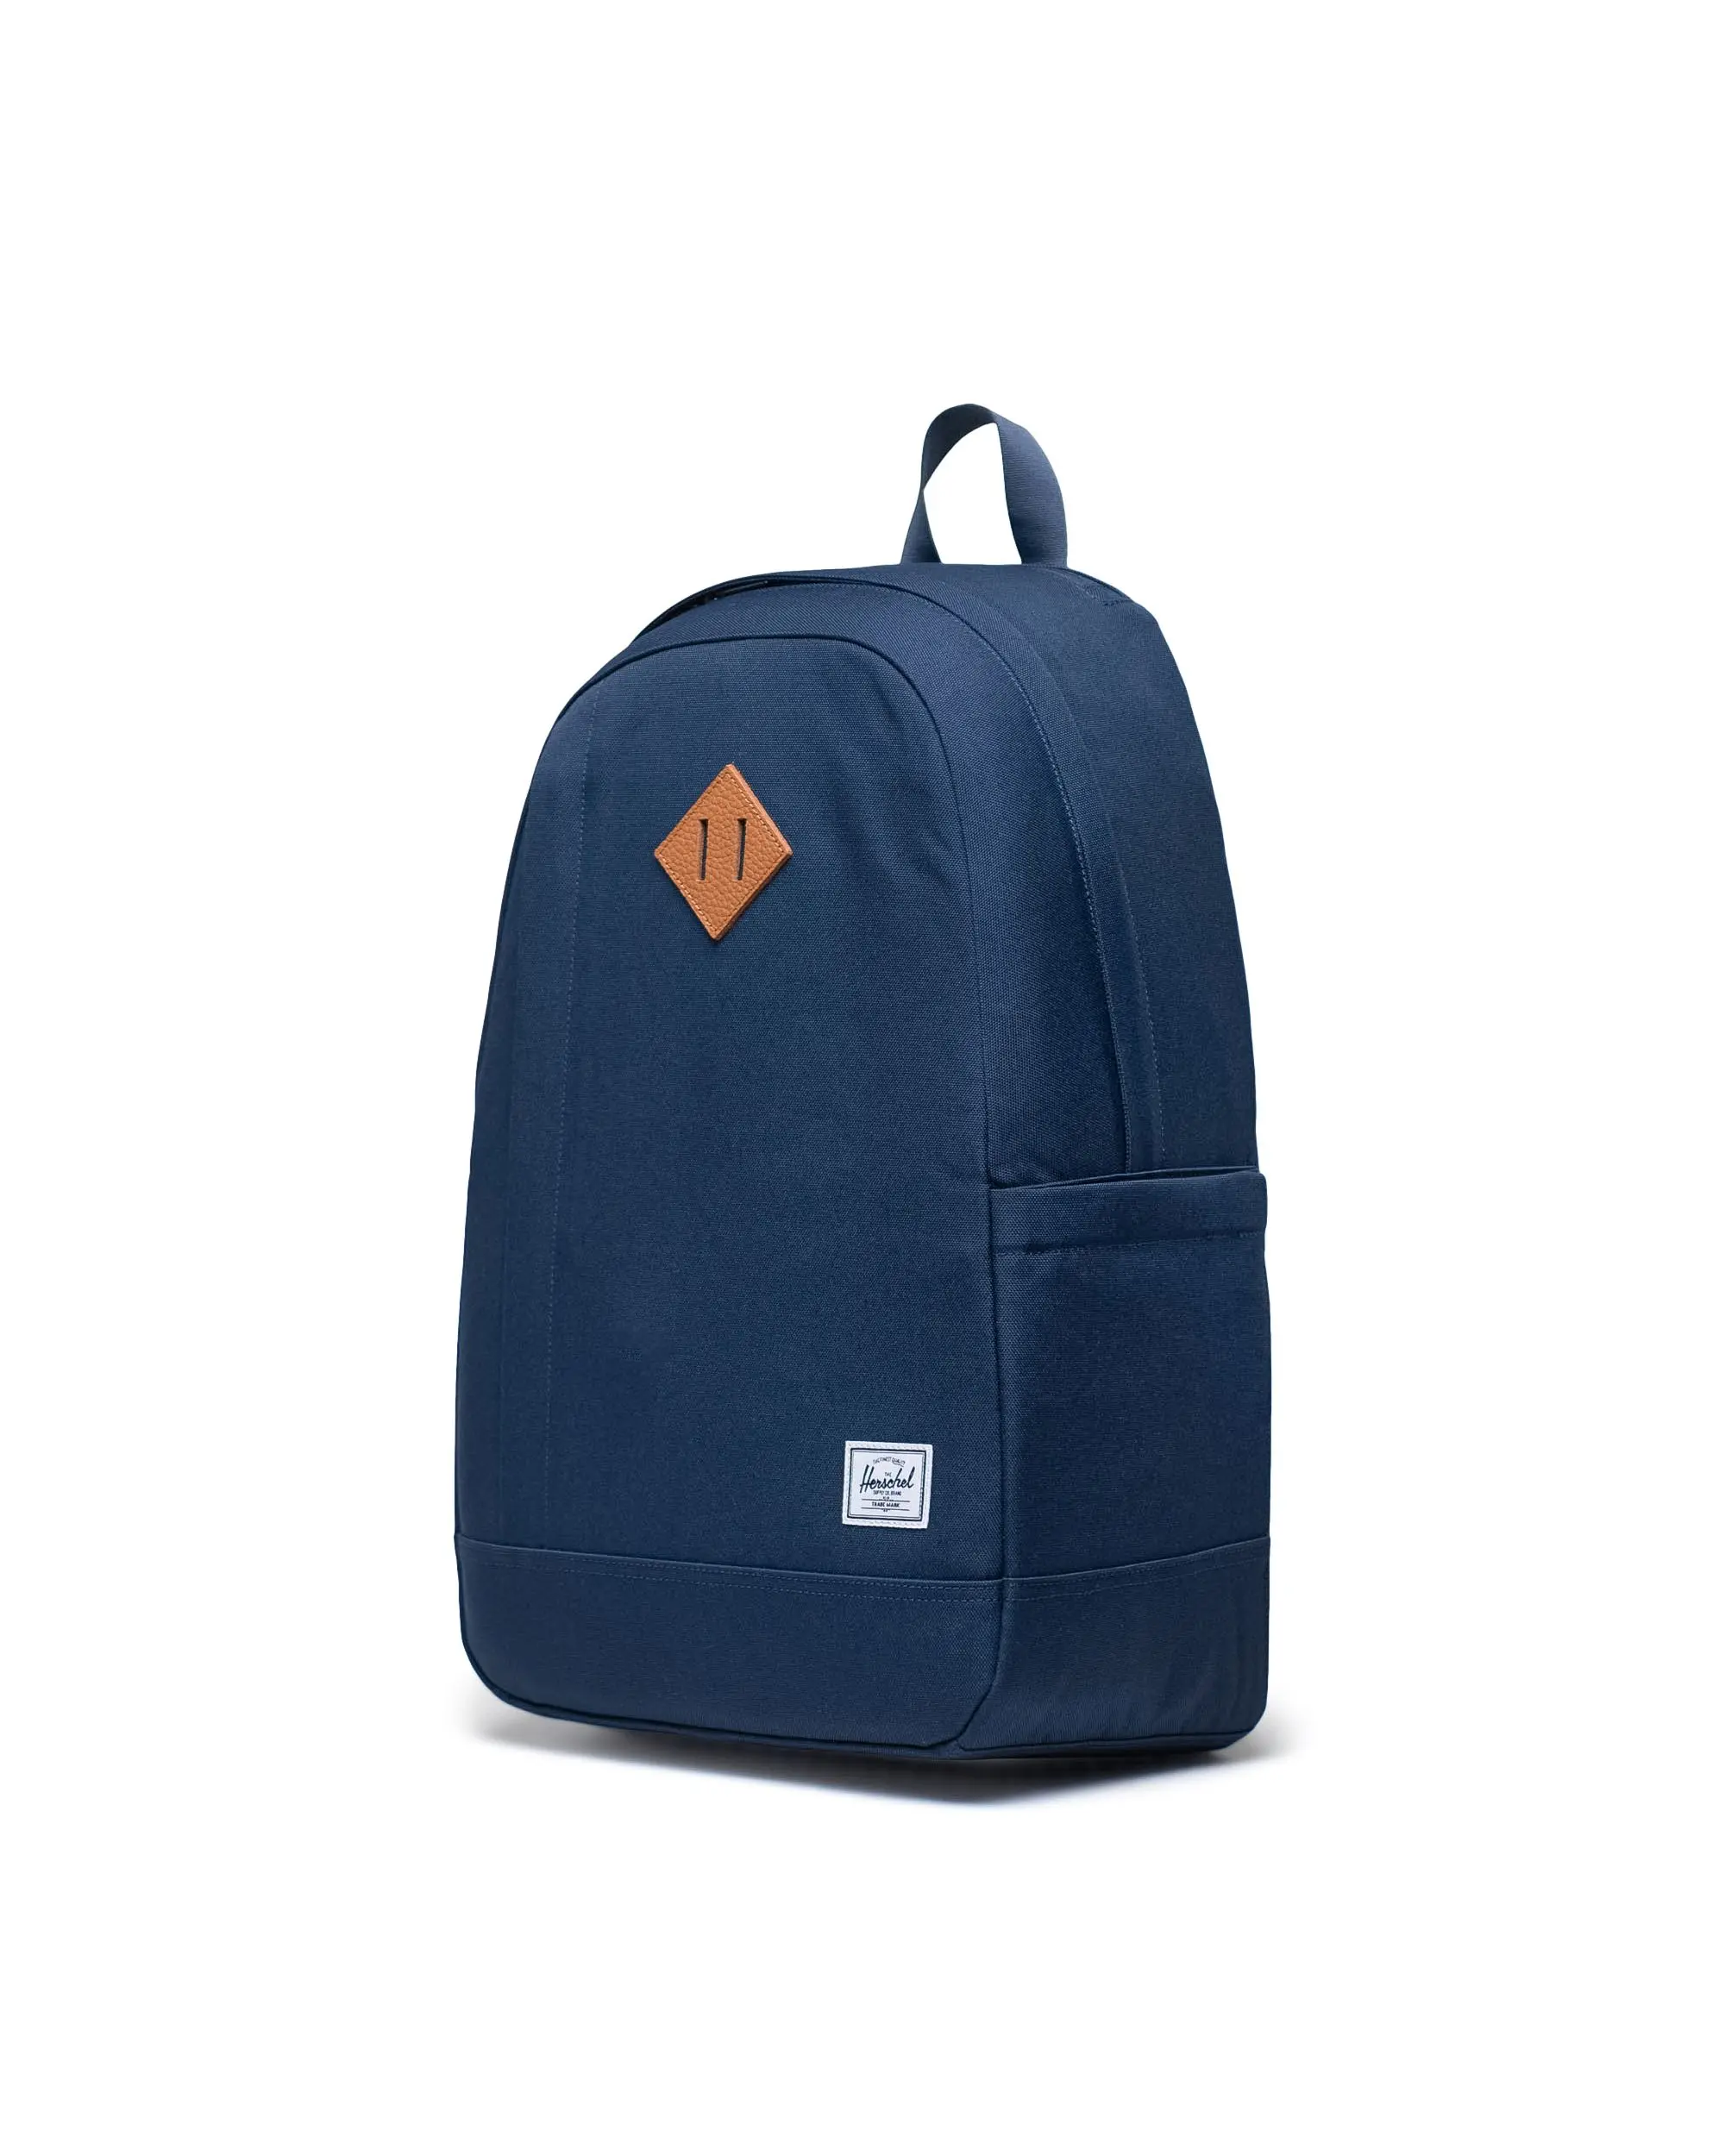 Seymour Backpack | Herschel Supply Company